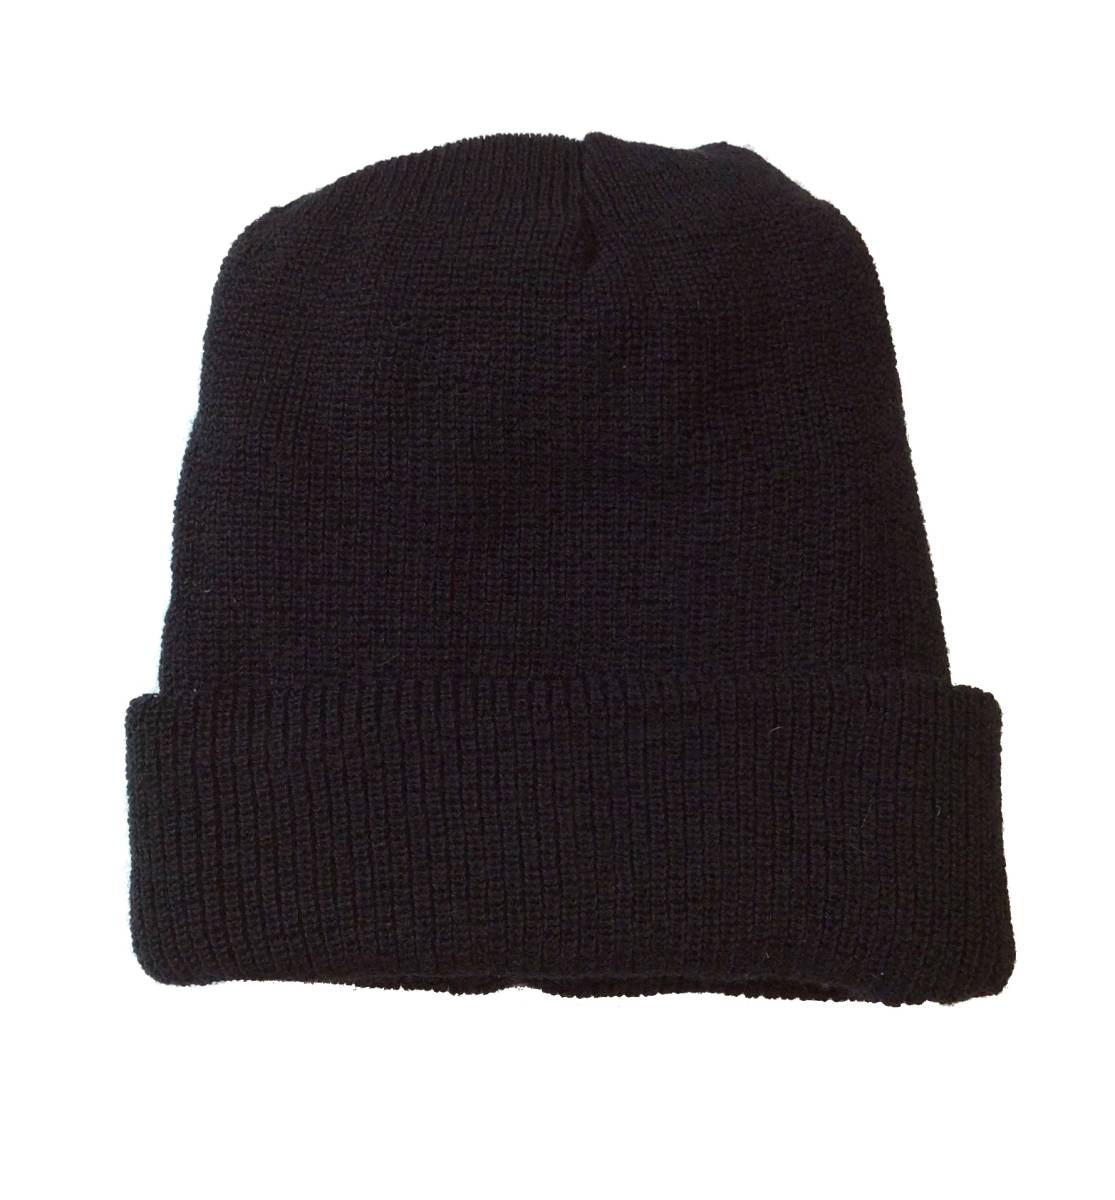 MIN-NANOmin nano GORE-TEX Gore-Tex knit cap knitted cap hat black black postage 250 jpy 